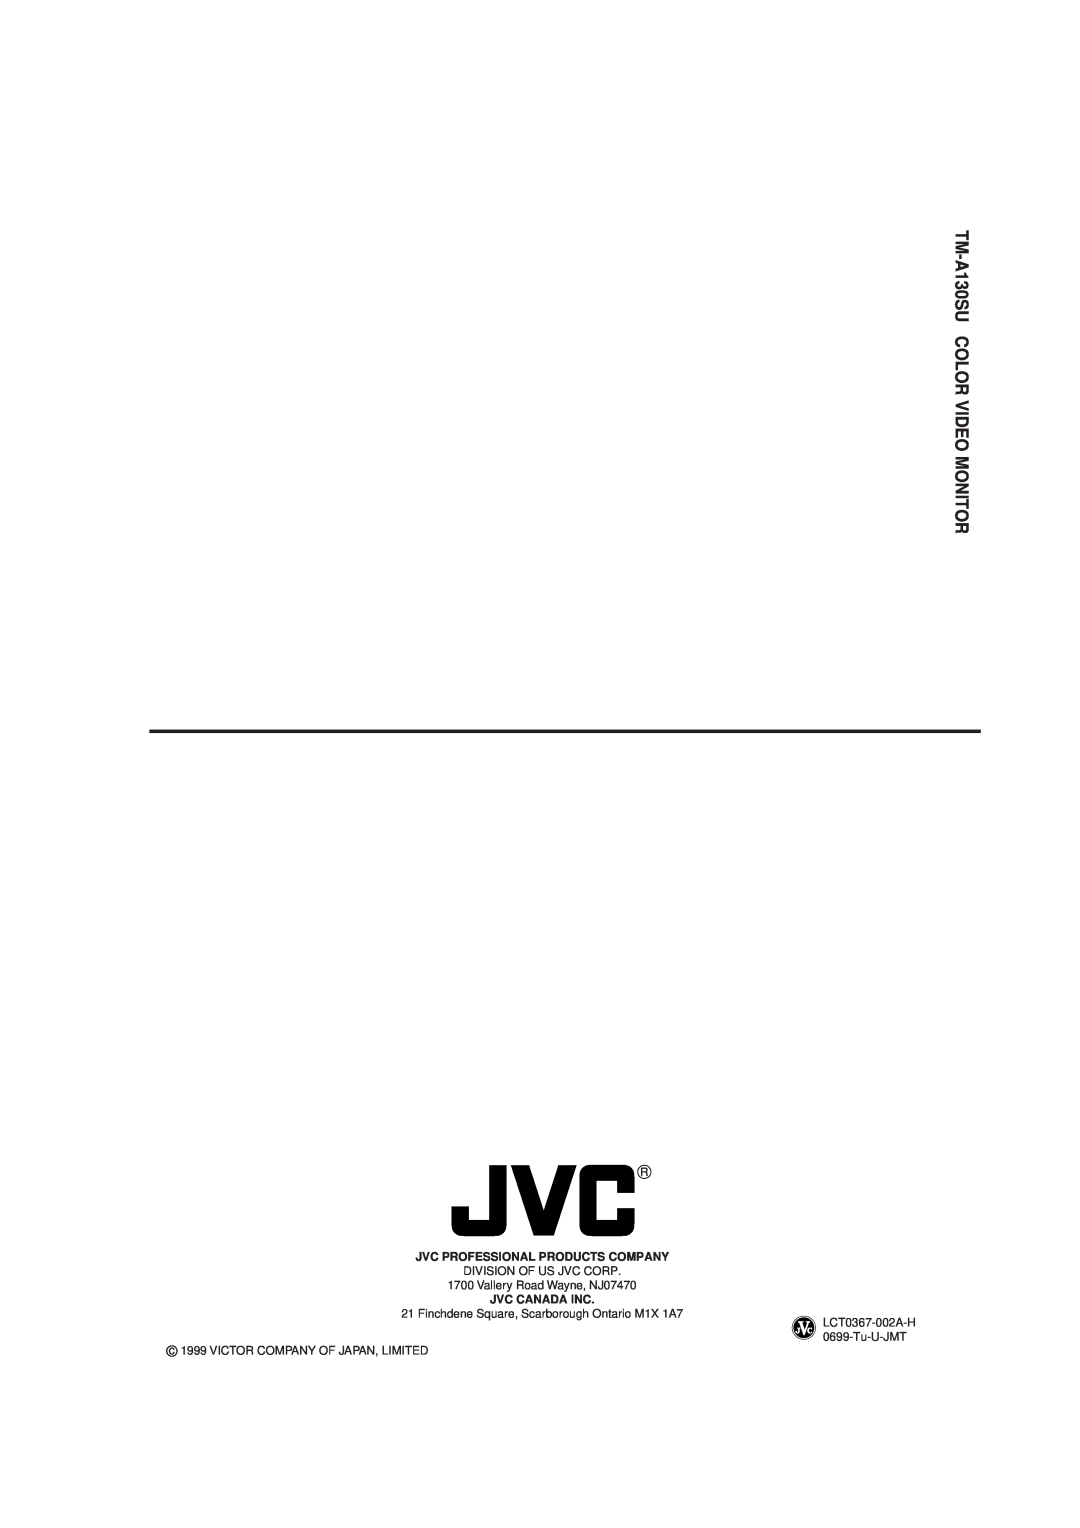 JVC manual TM-A130SU COLOR VIDEO MONITOR, Jvc Professional Products Company, Jvc Canada Inc 